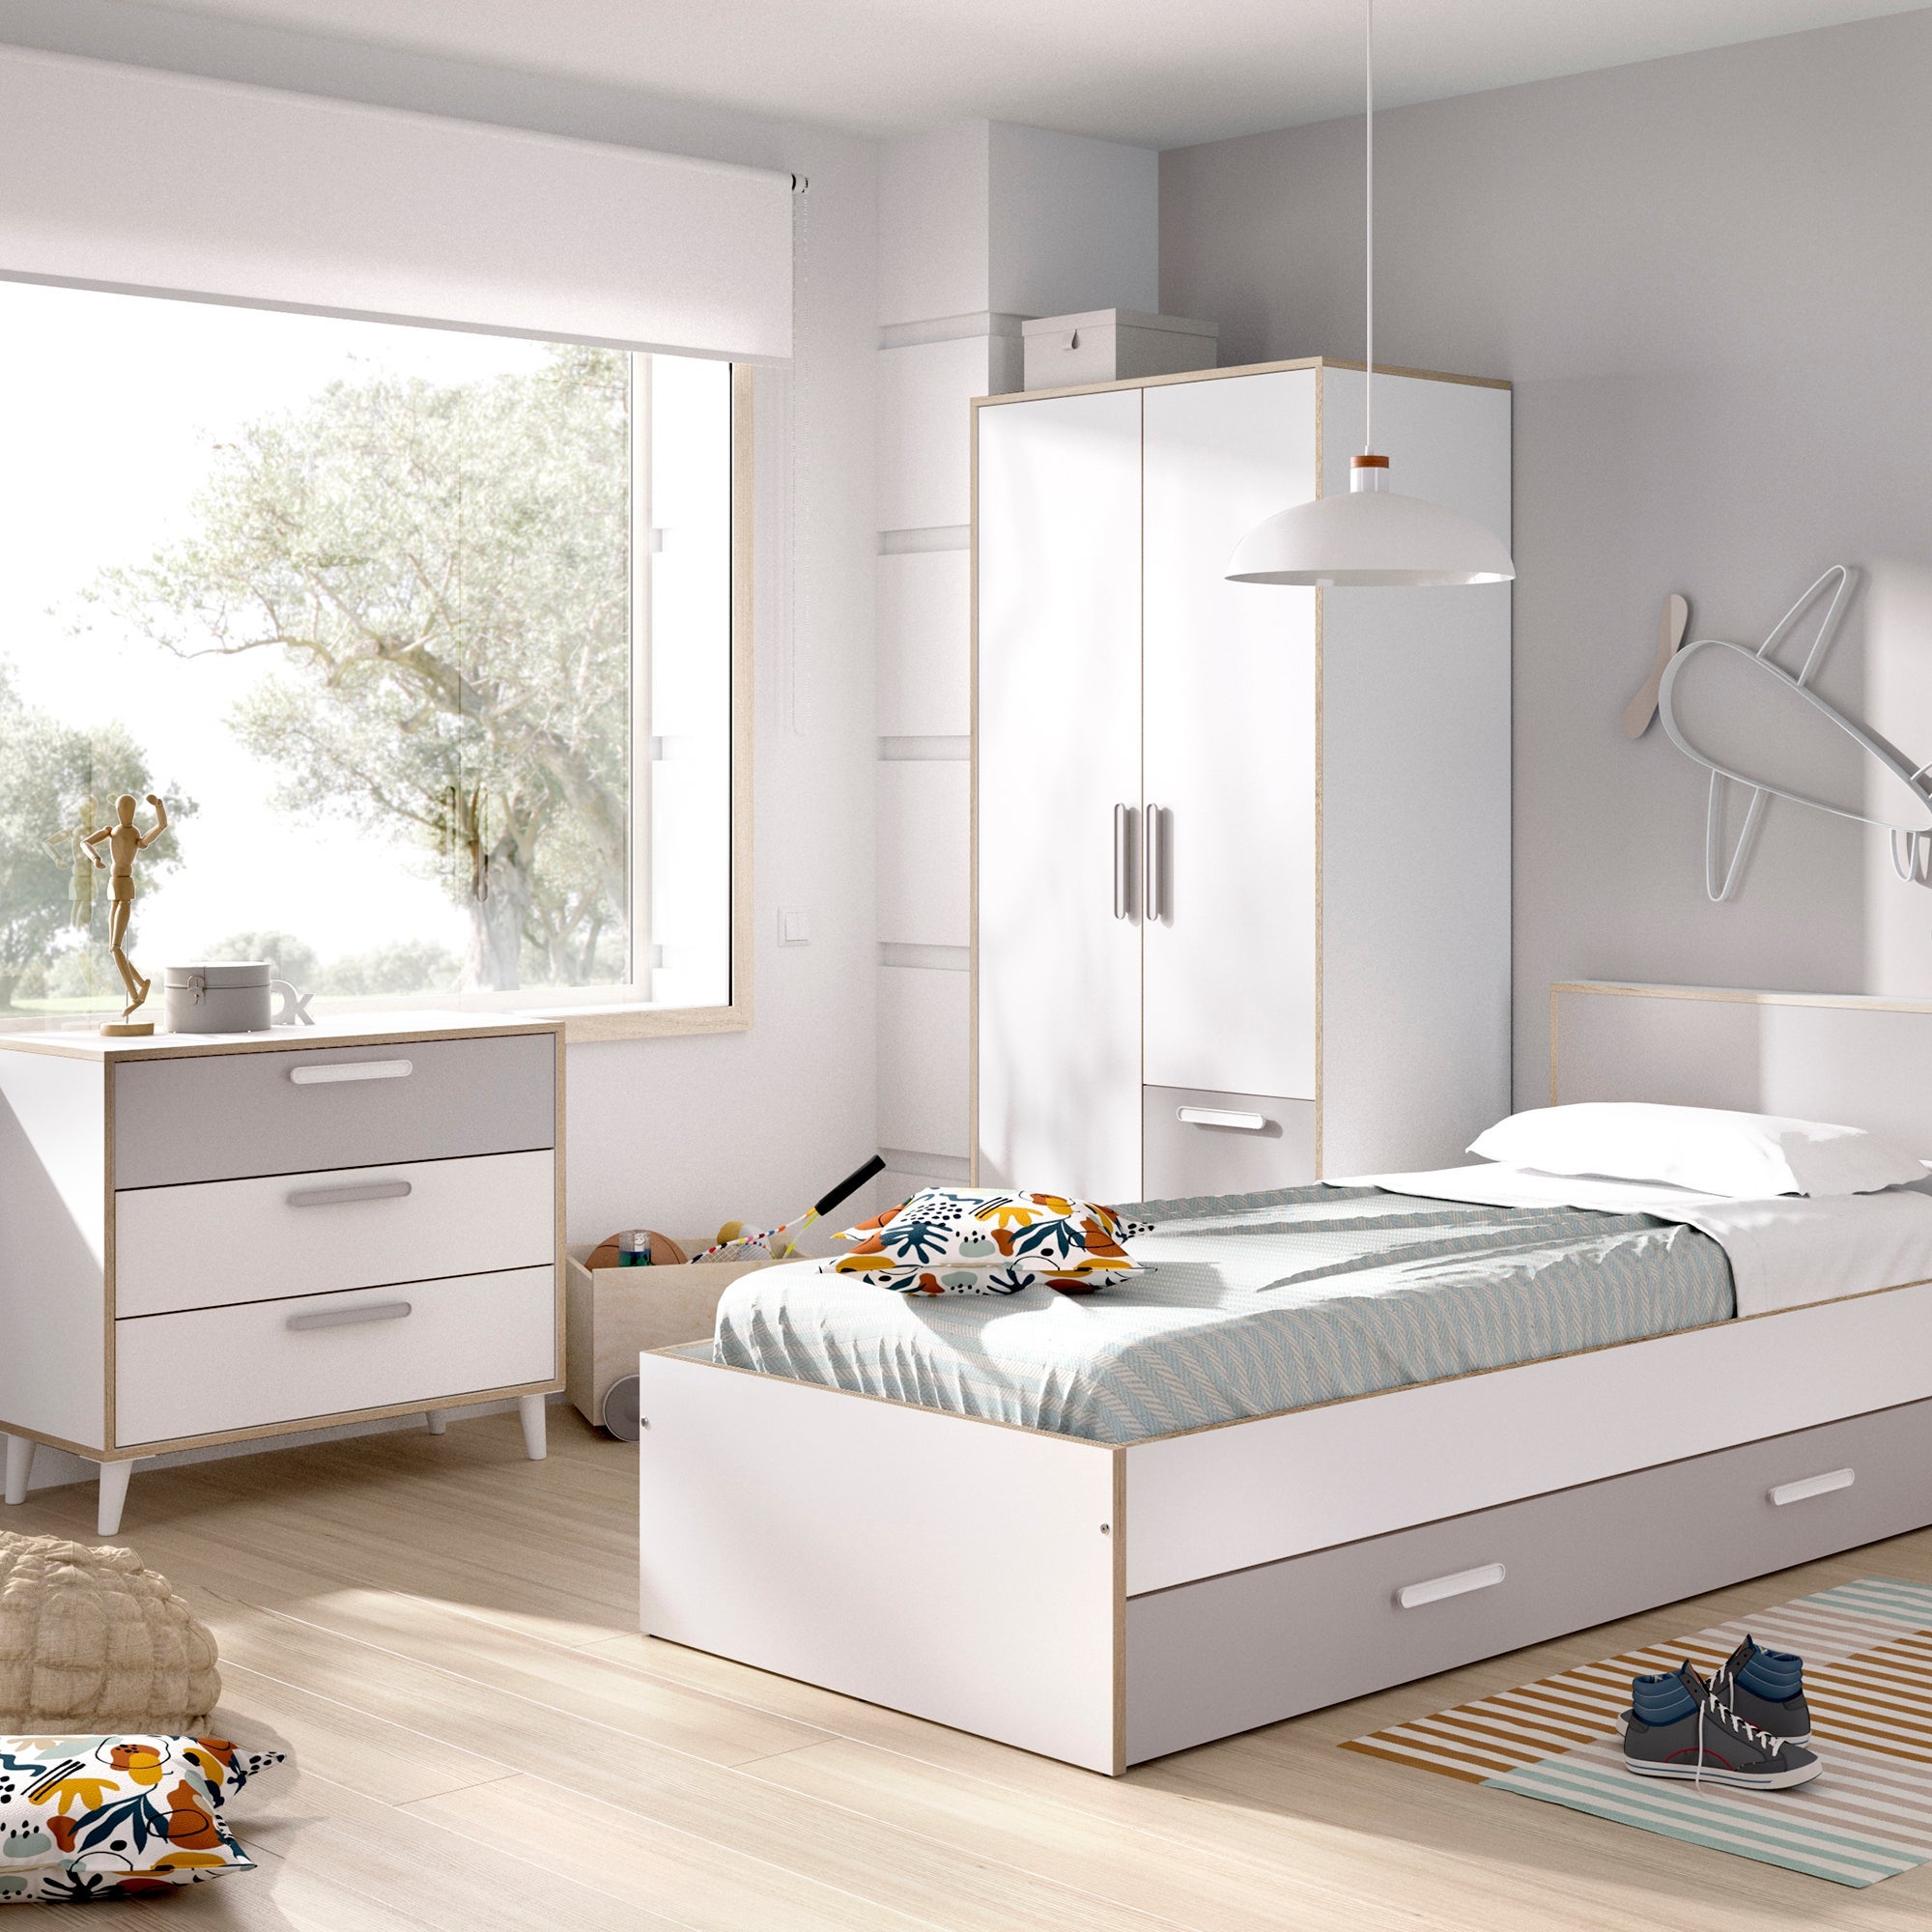 cama abatible, dormitorio completo, barato, moderno, dormitorio completo  matrimonio en Murcia.